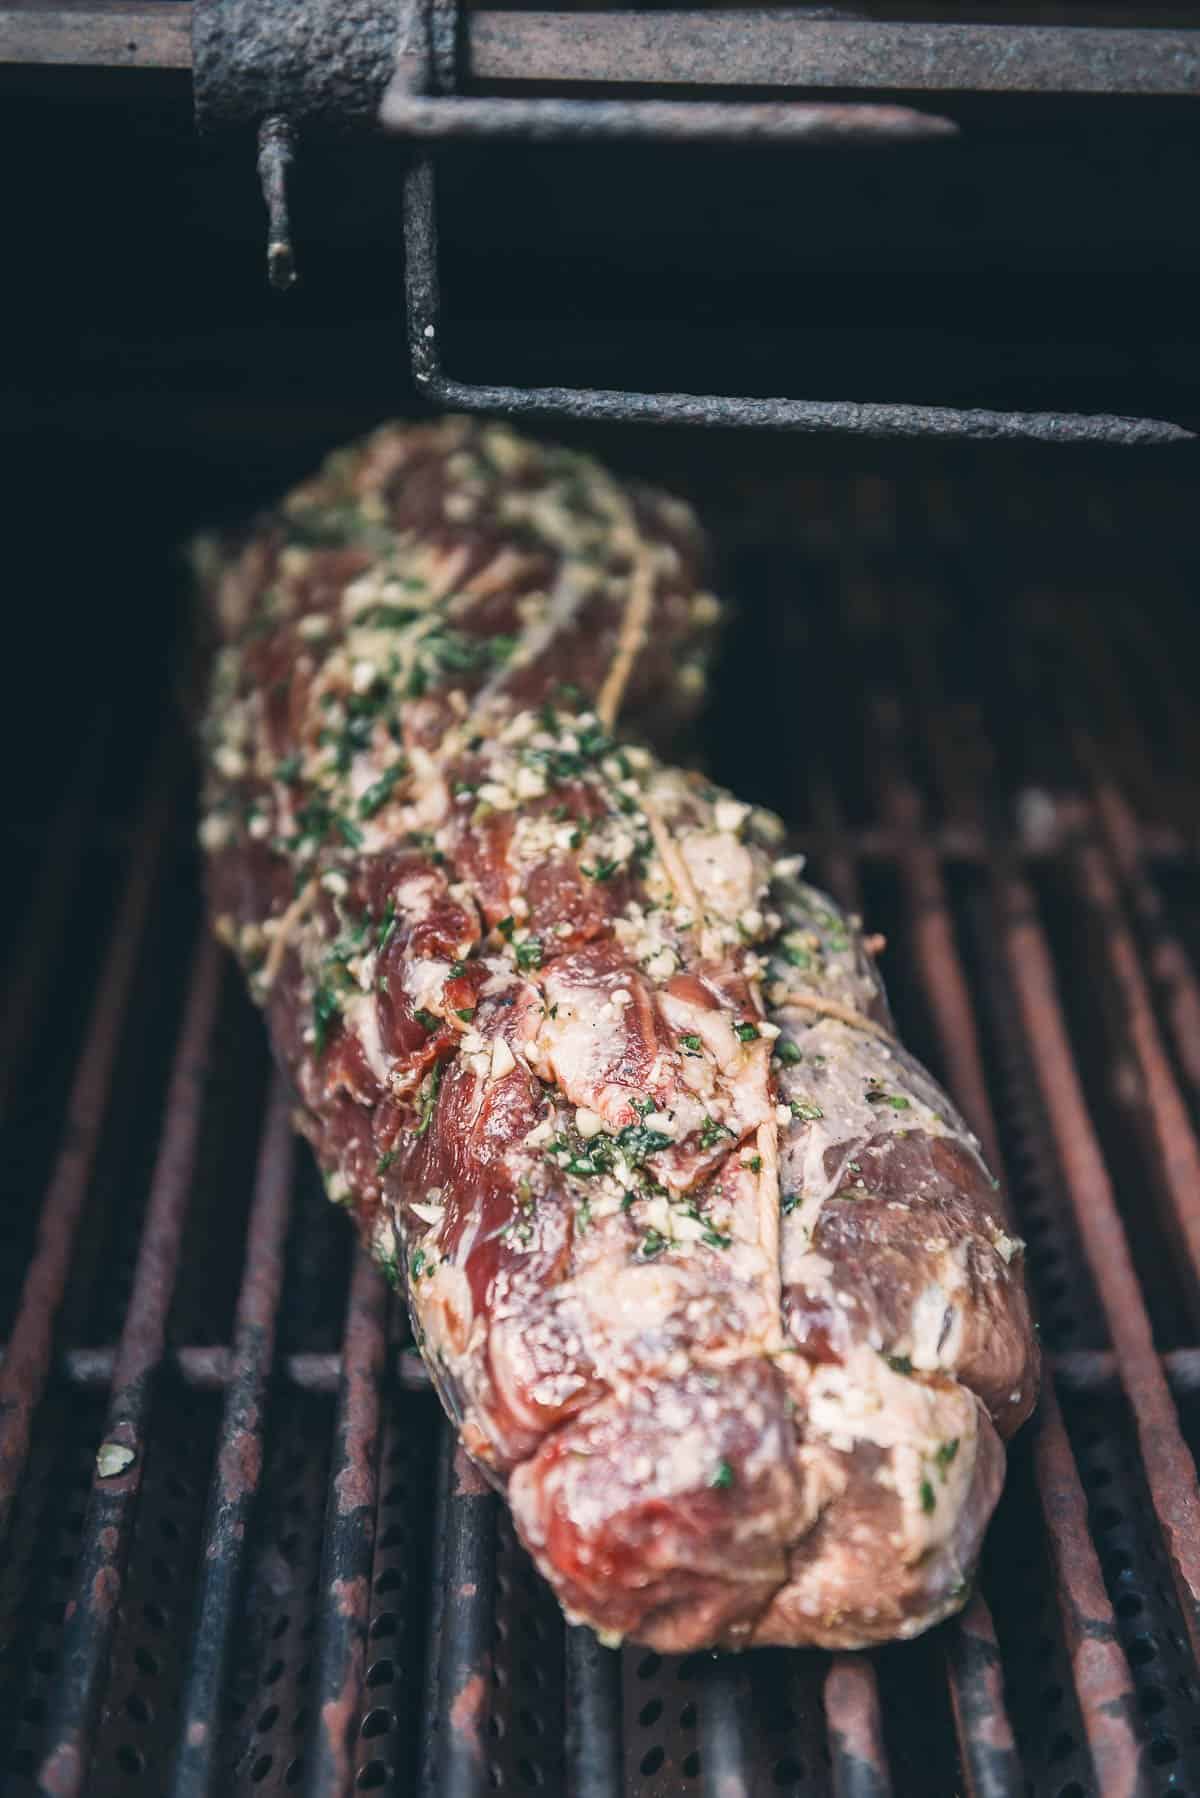 The whole beef tenderloin roast on the grill.